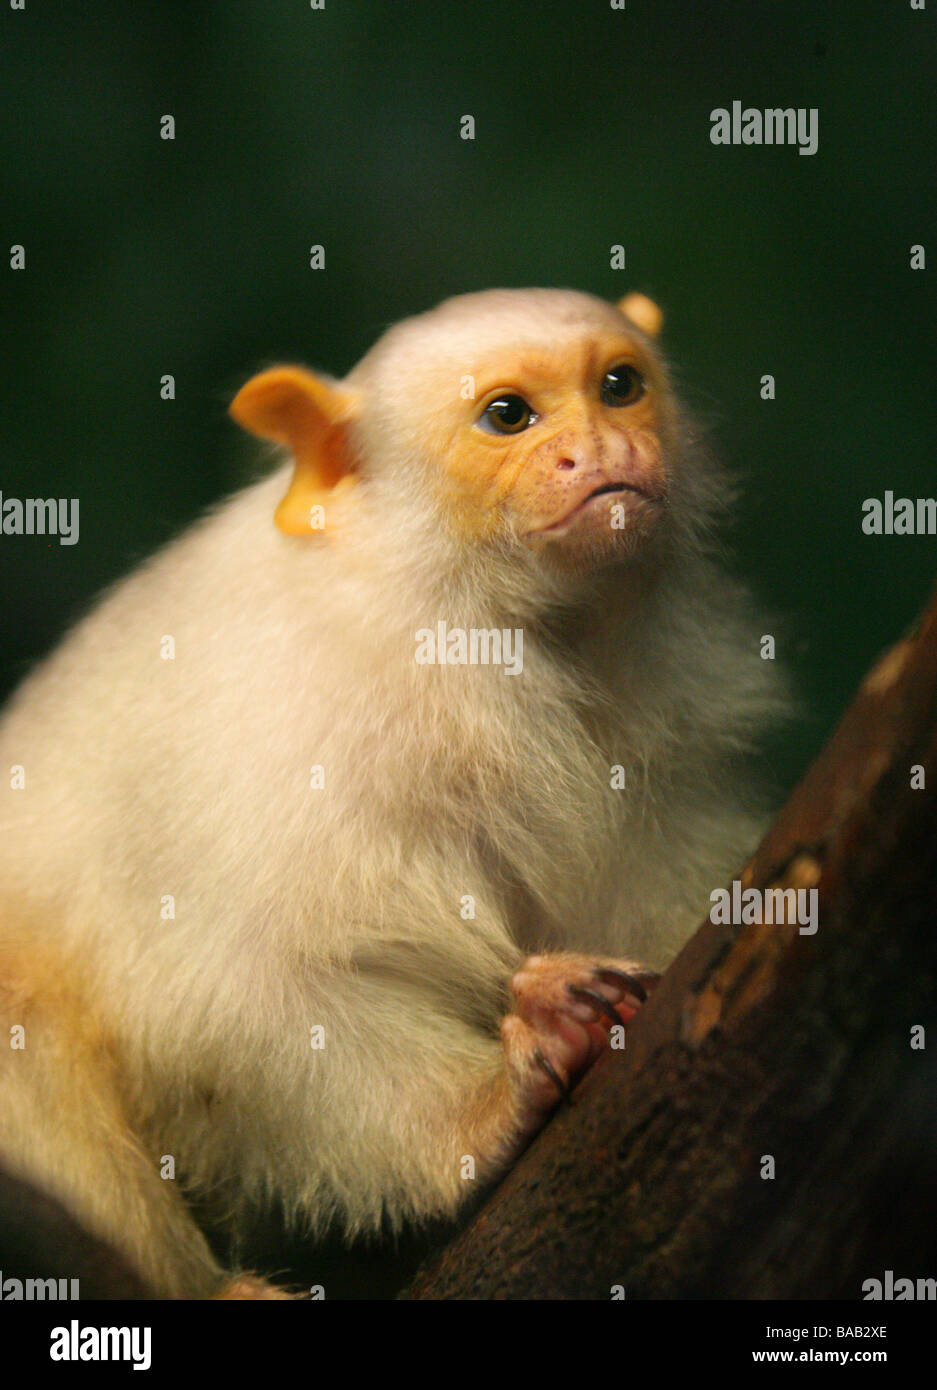 Silvery Marmoset, Callithrix argentata, Cebidae, Haplorrhini Primates, New World Monkey from Brazil, South-east Amazon Basin Stock Photo